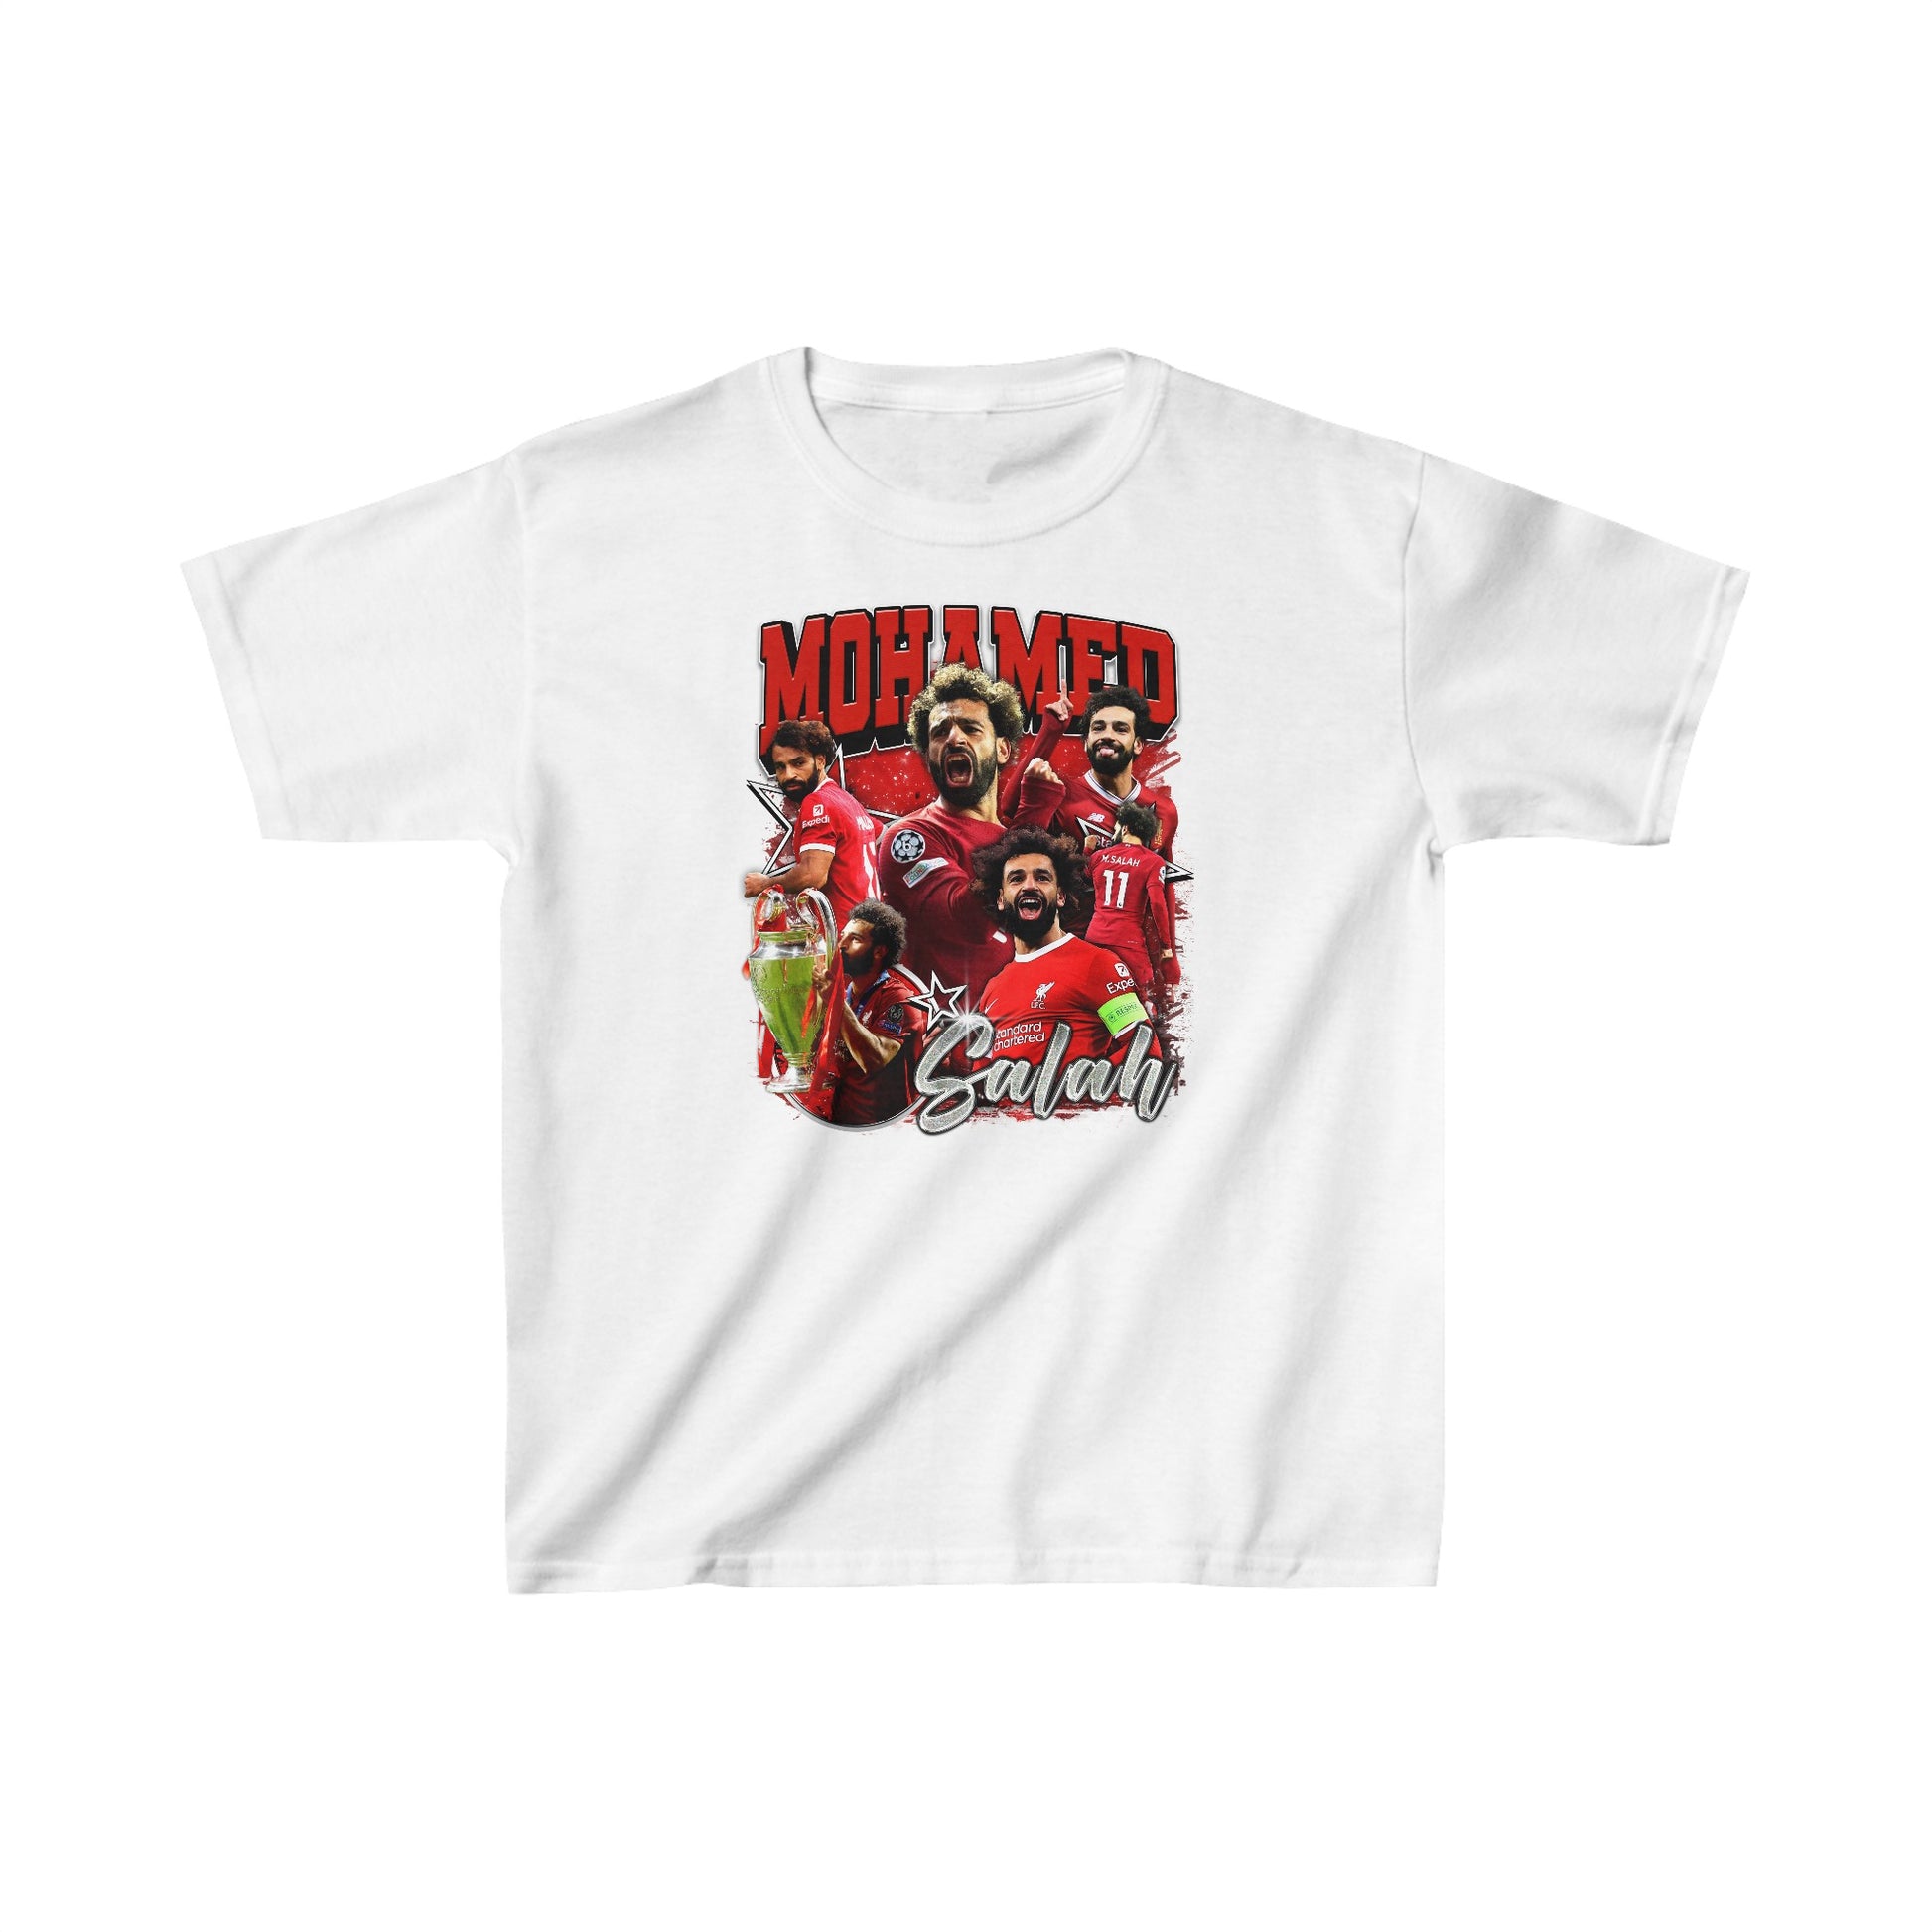 Mohamed Salah Liverpool Graphic T-Shirt